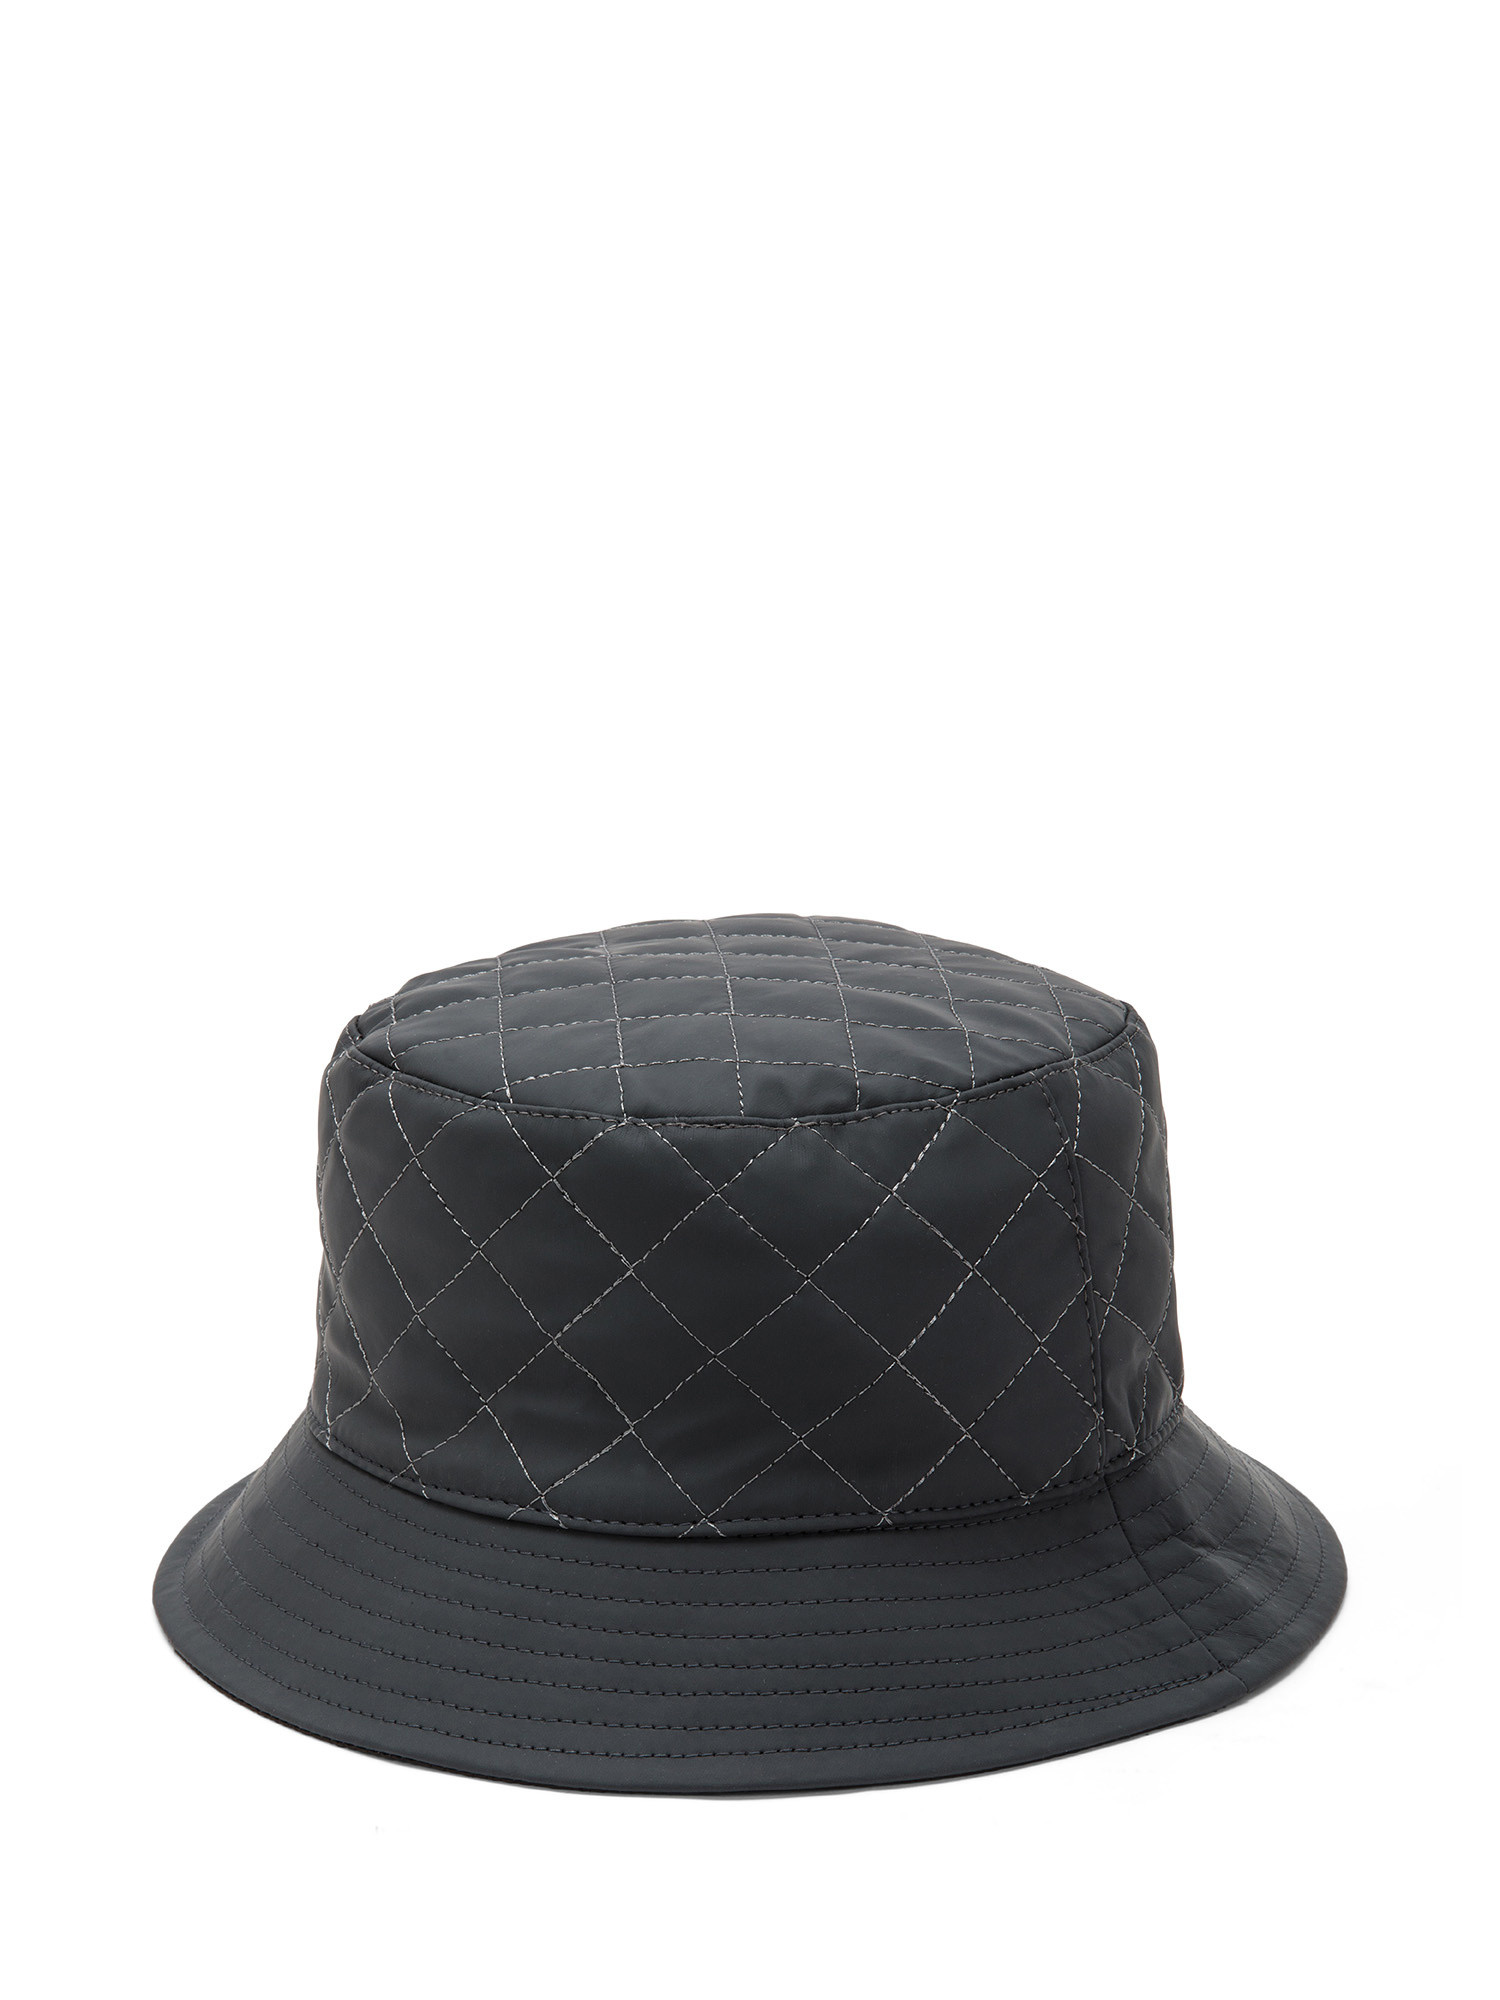 Koan - Quilted fisherman hat, Grey, large image number 0